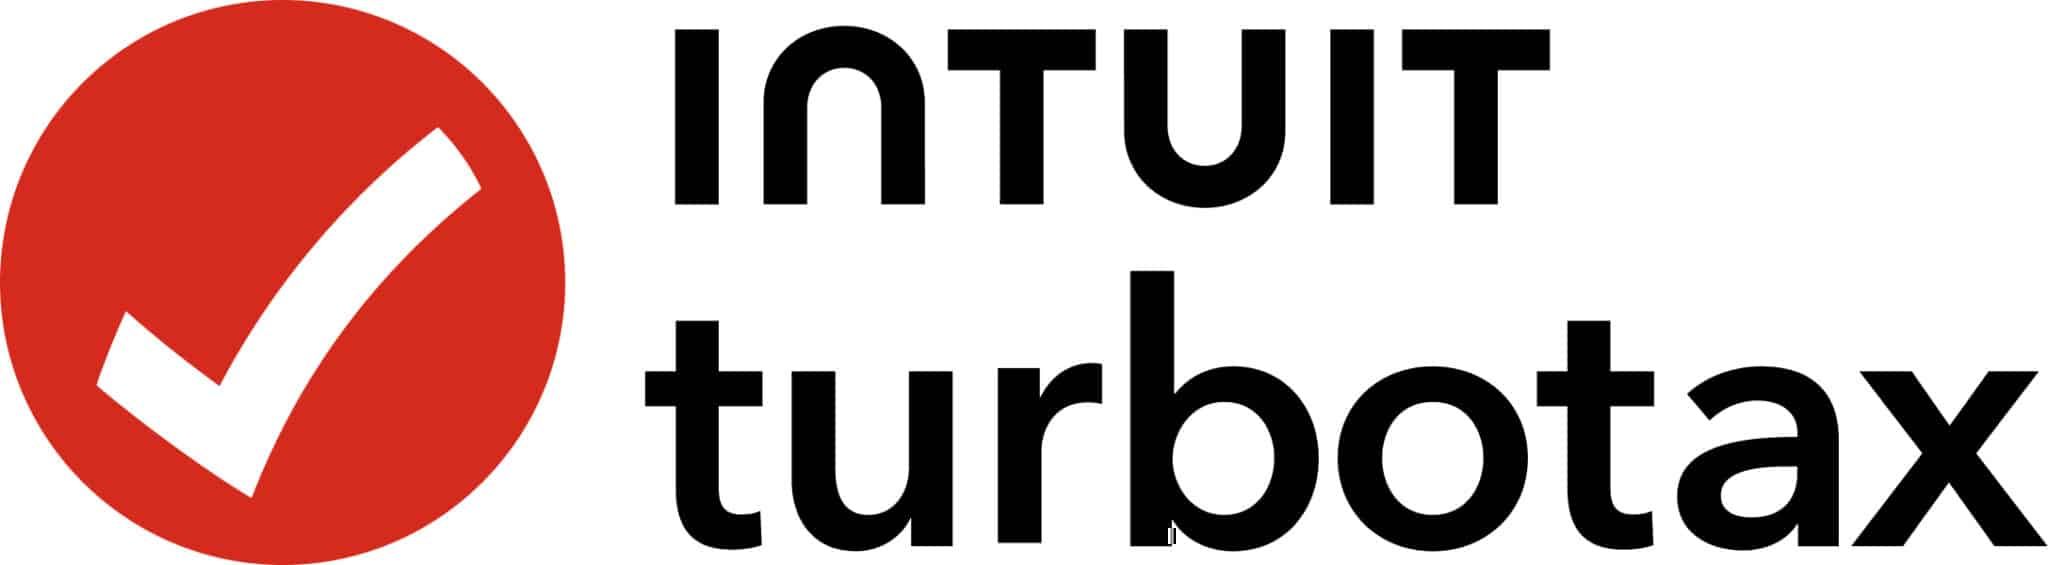 best tax software for investors: TurboTax Premier